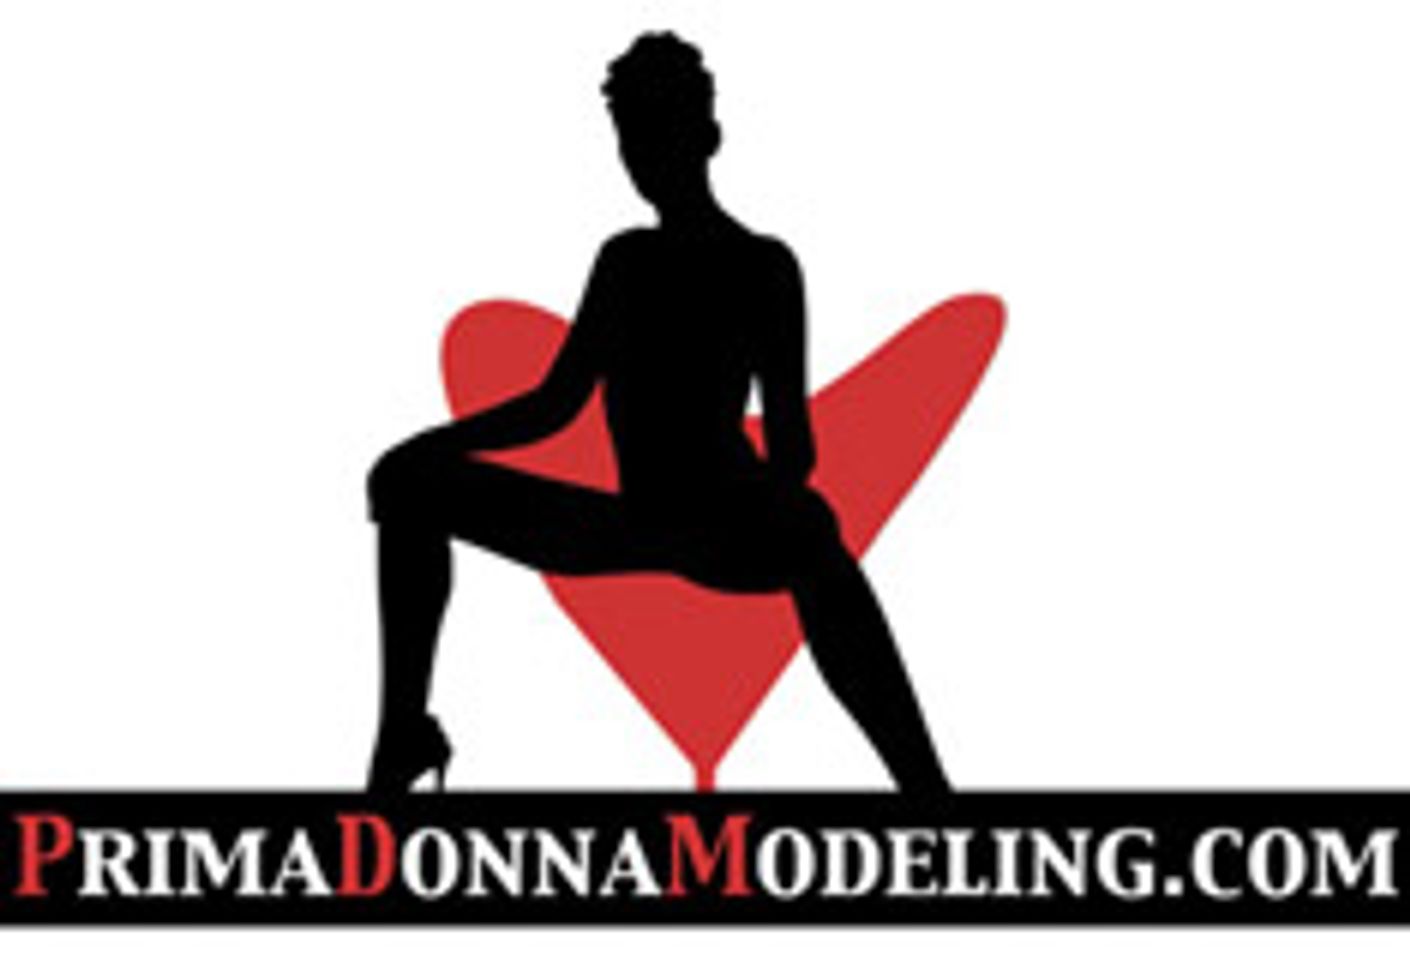 PrimaDonna Modeling: New Agency Enters the Scene